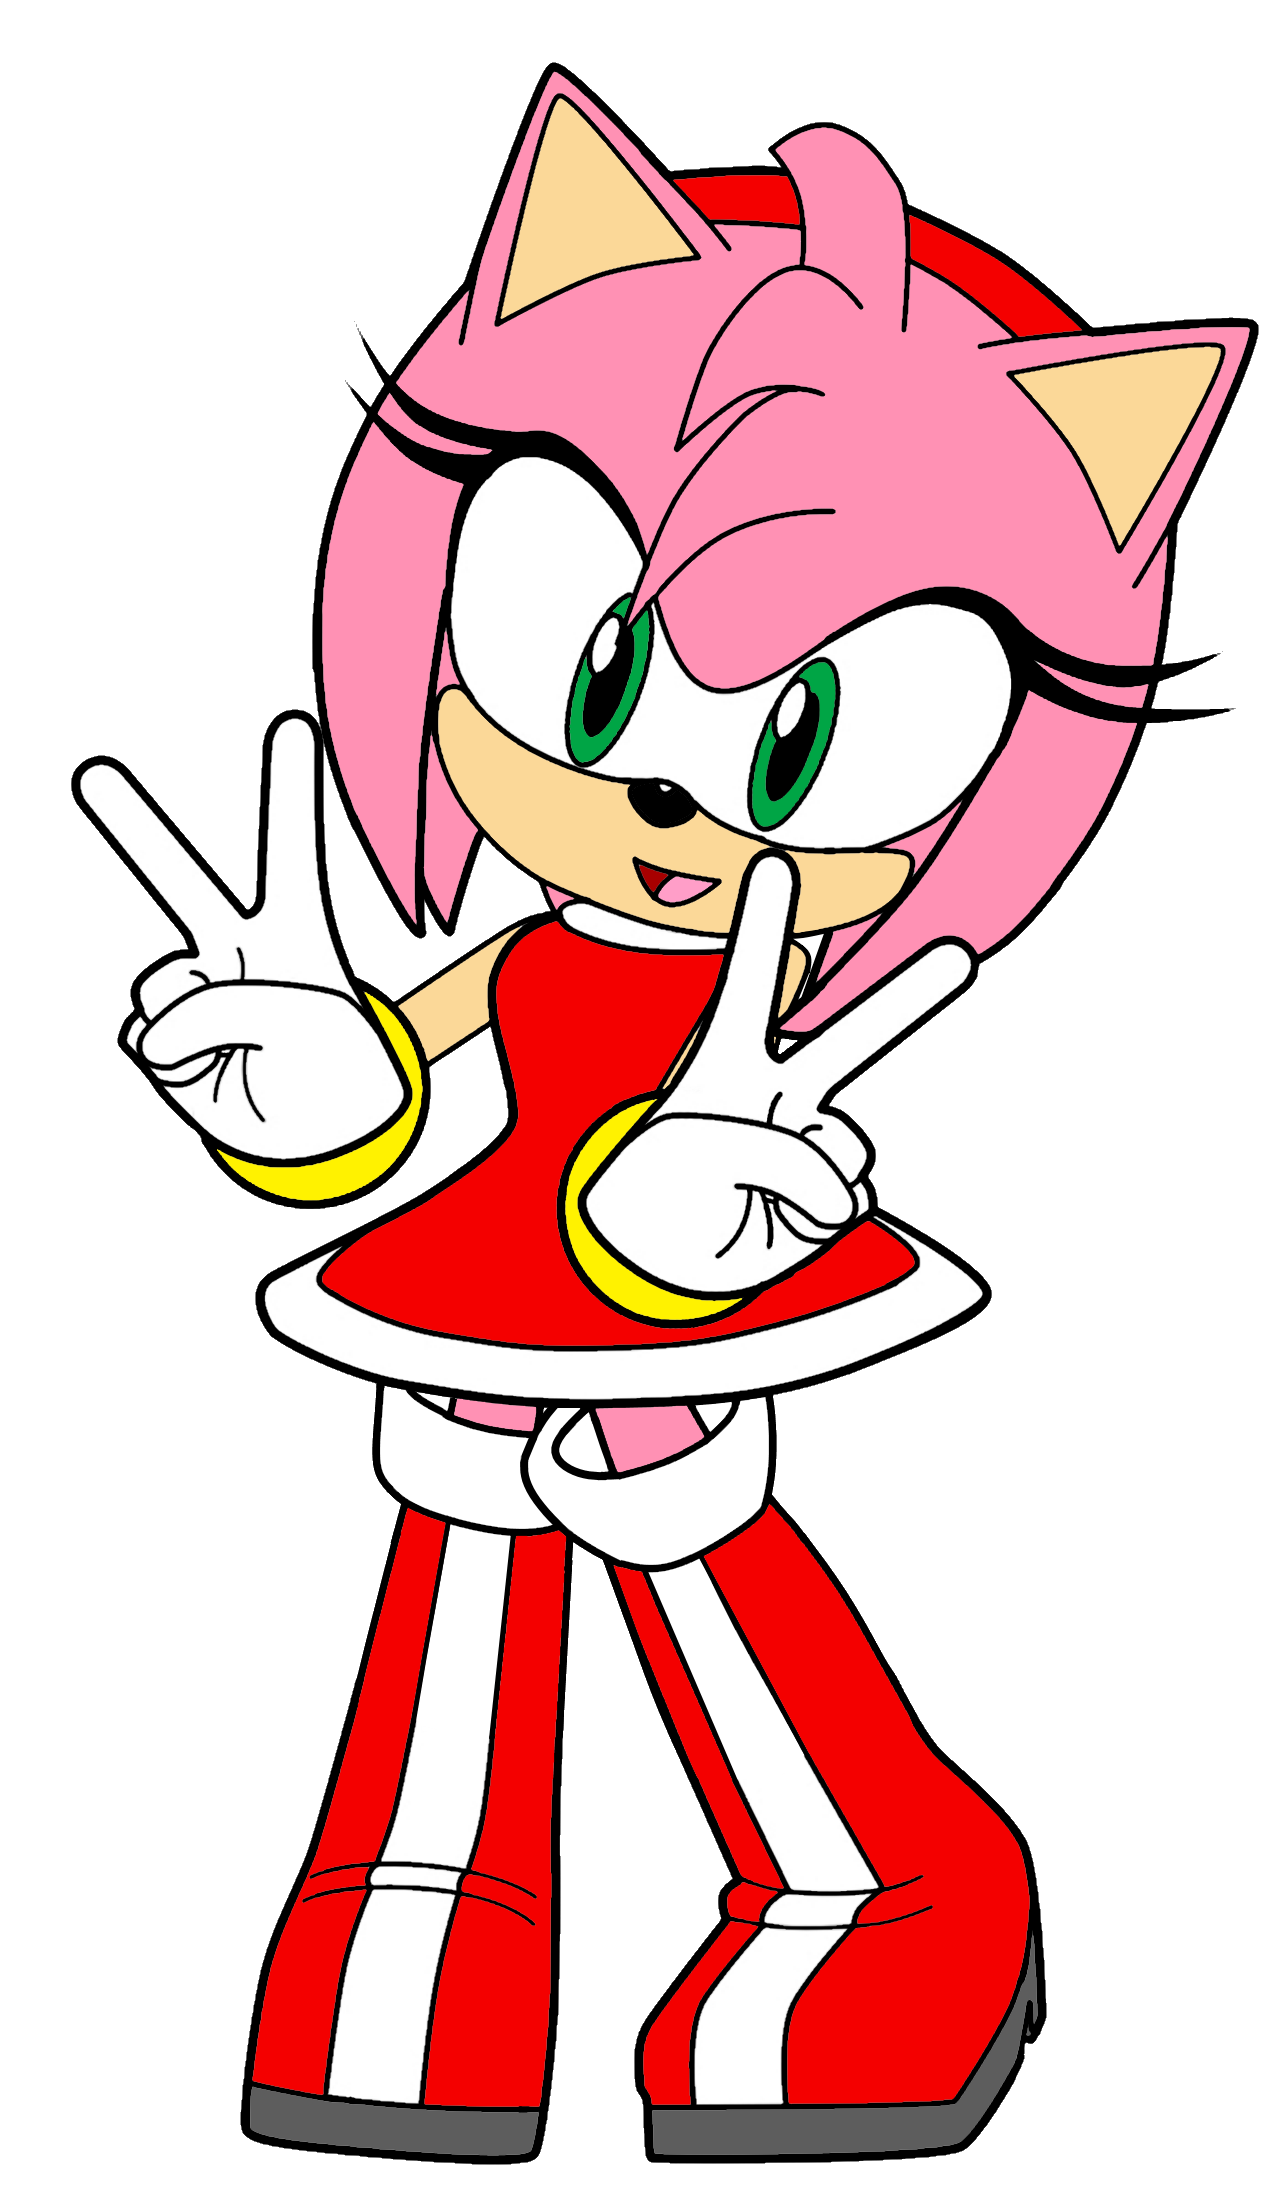 Amy Rose - Sonic Heroes Sketch